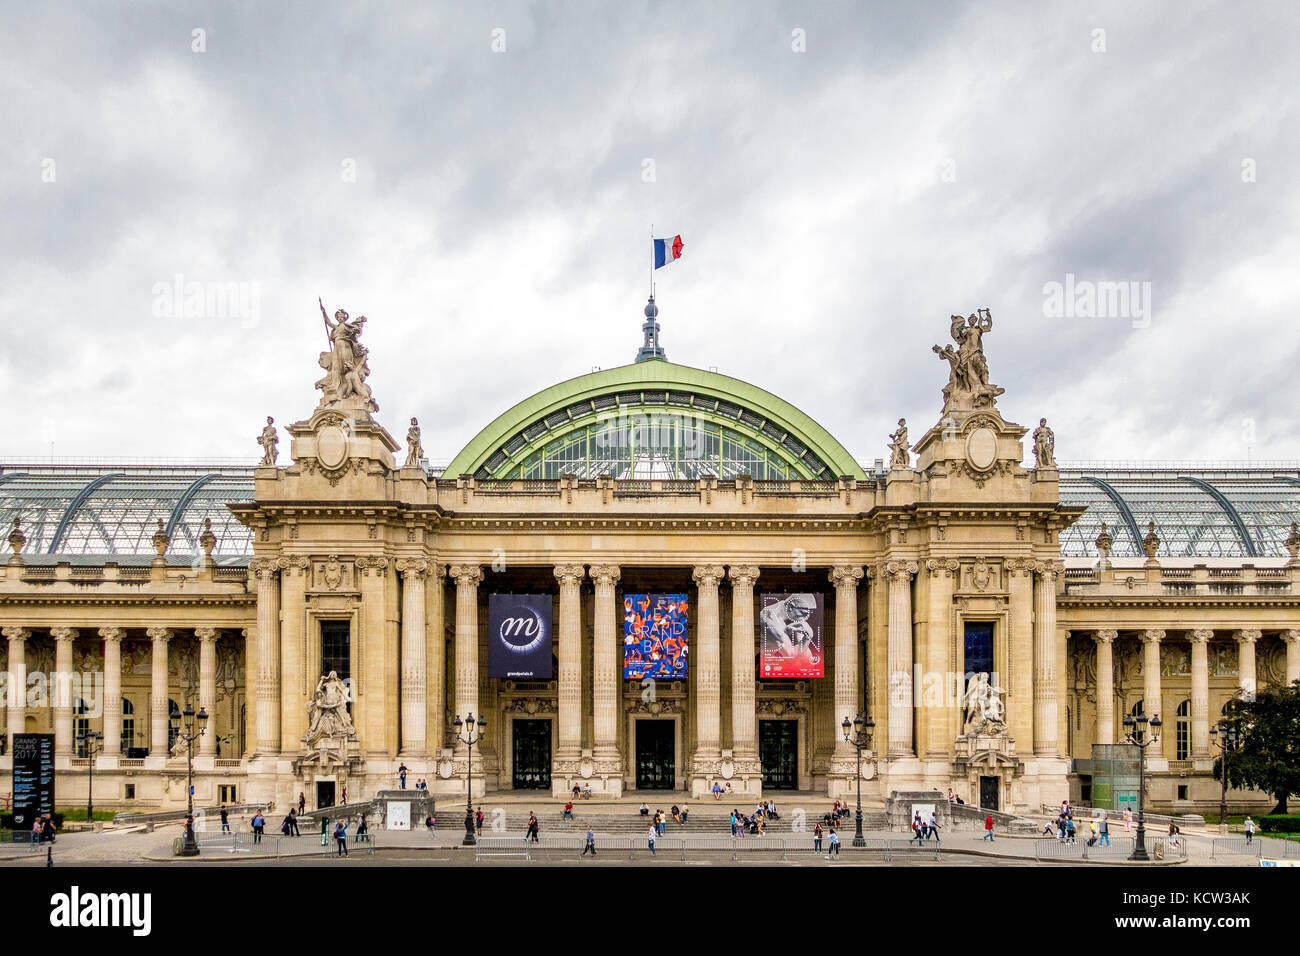 The facade of the Grand Palais in Paris, France Stock Photo